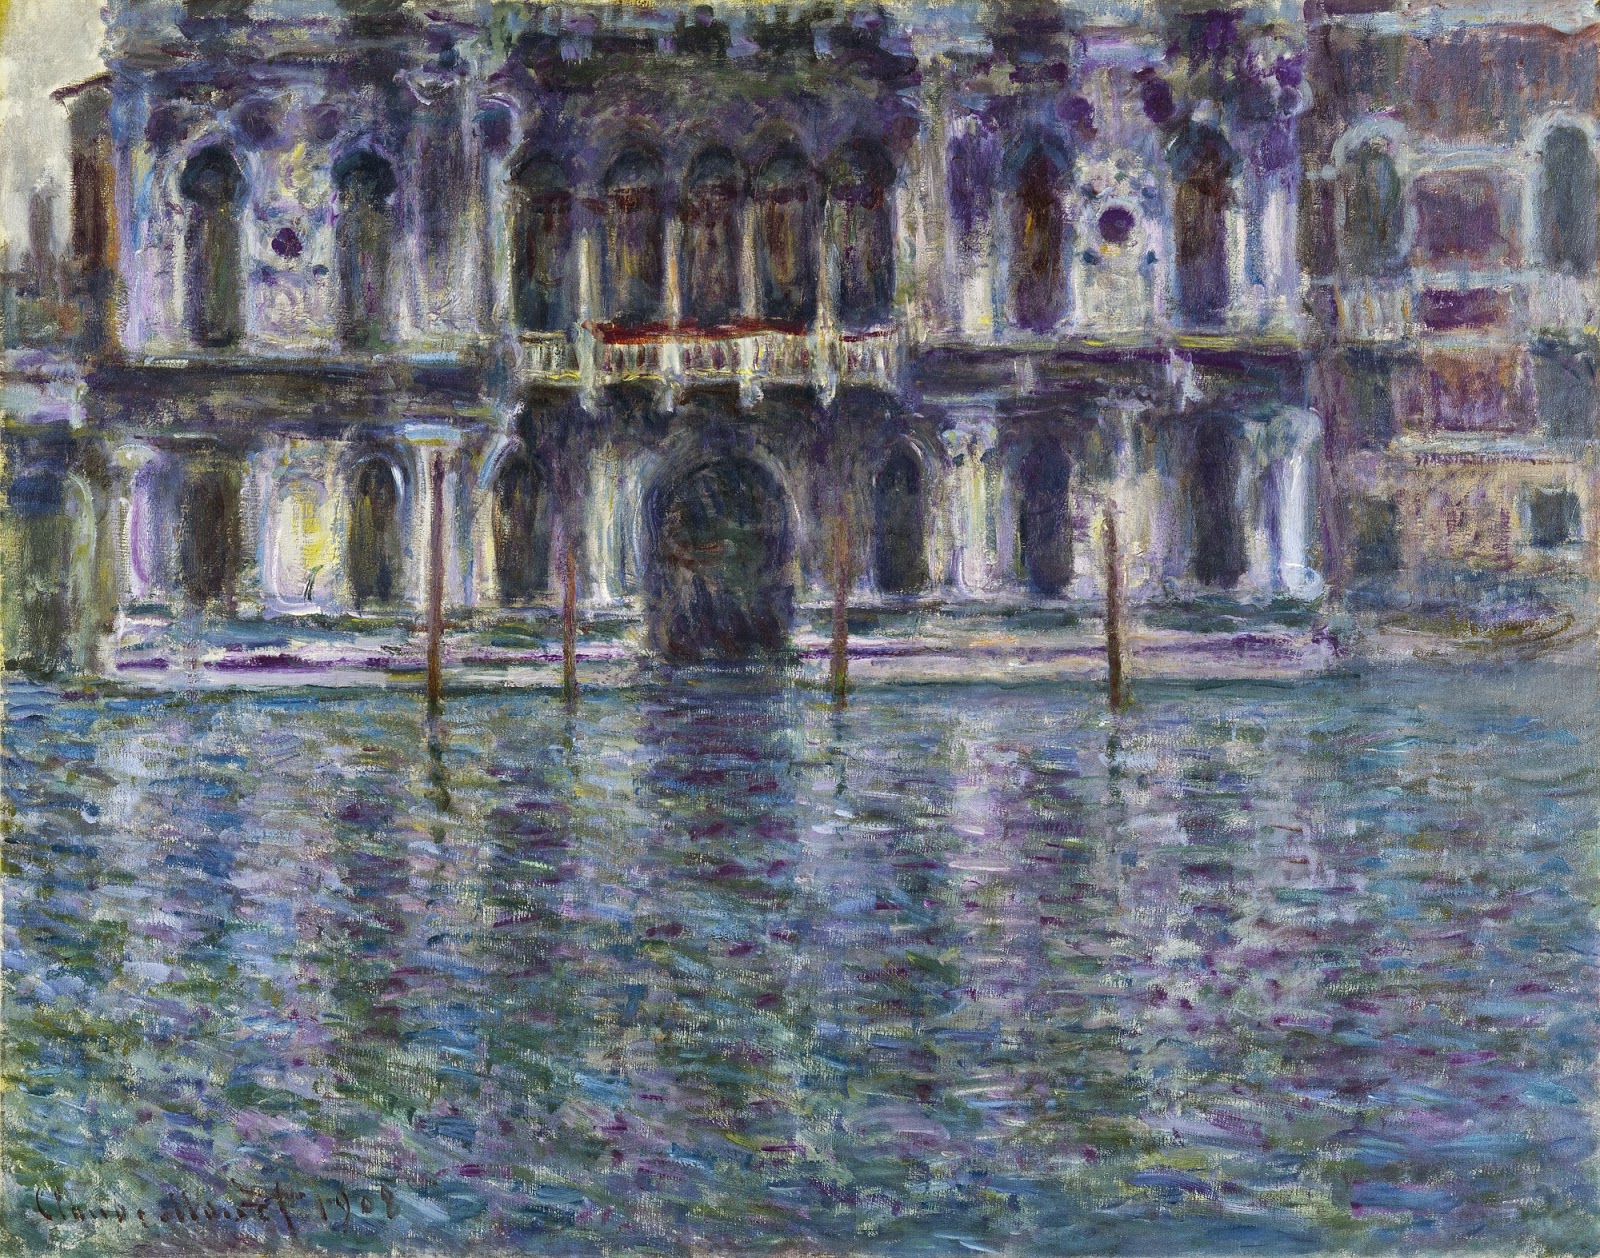 Claude+Monet-1840-1926 (508).jpg